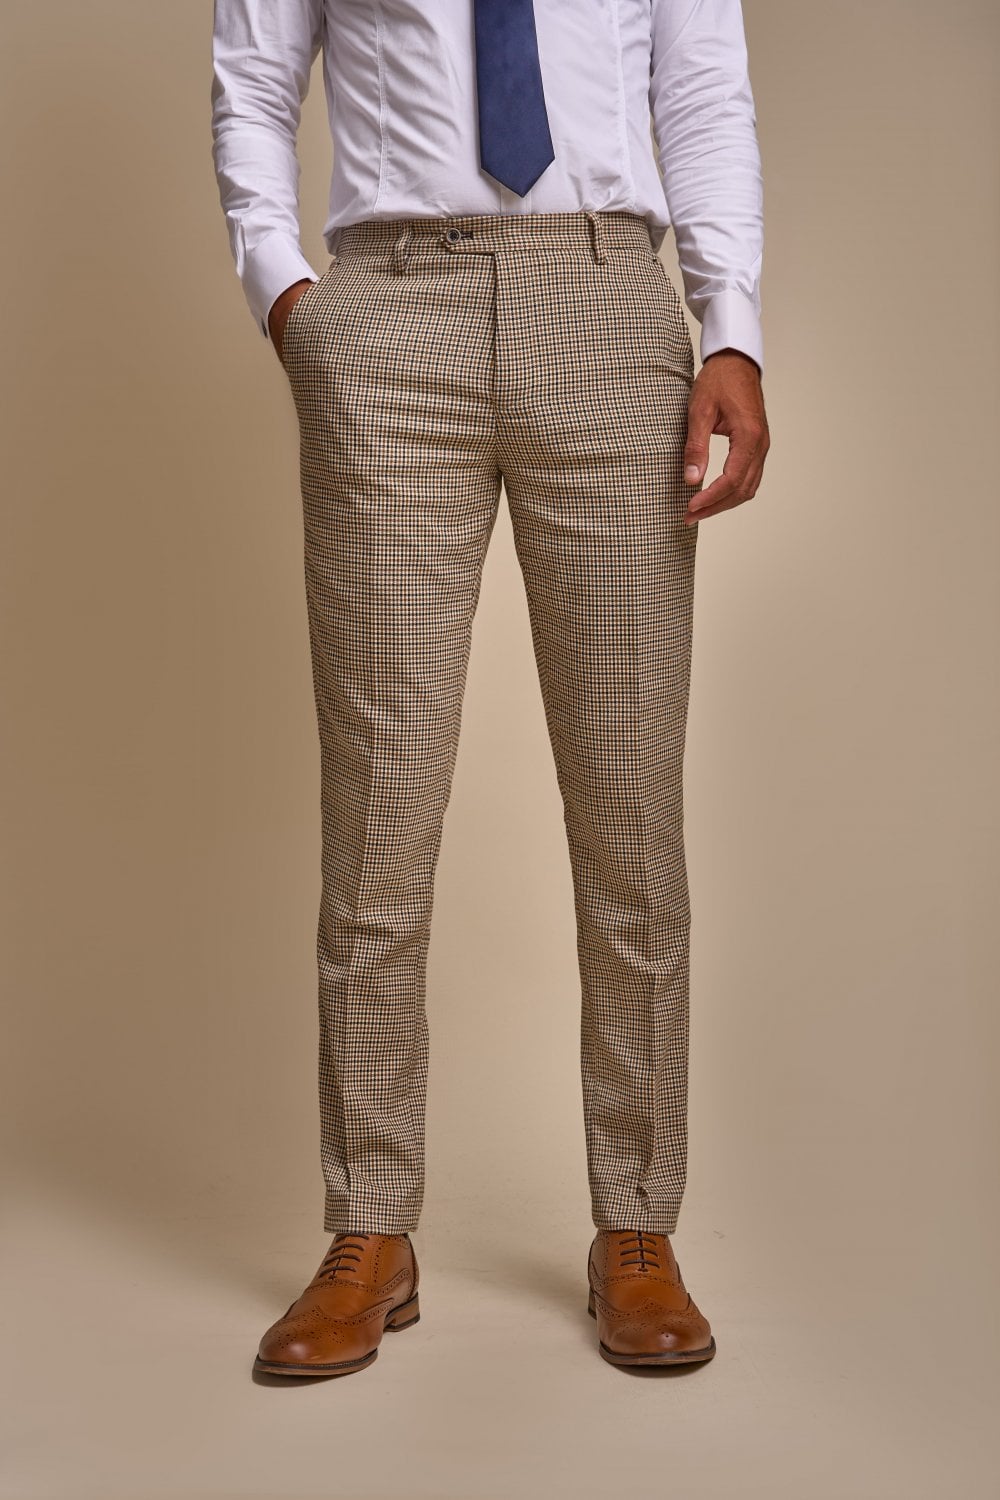 Cavani Elwood Houndstooth Beige Tan Check Three Piece Suit